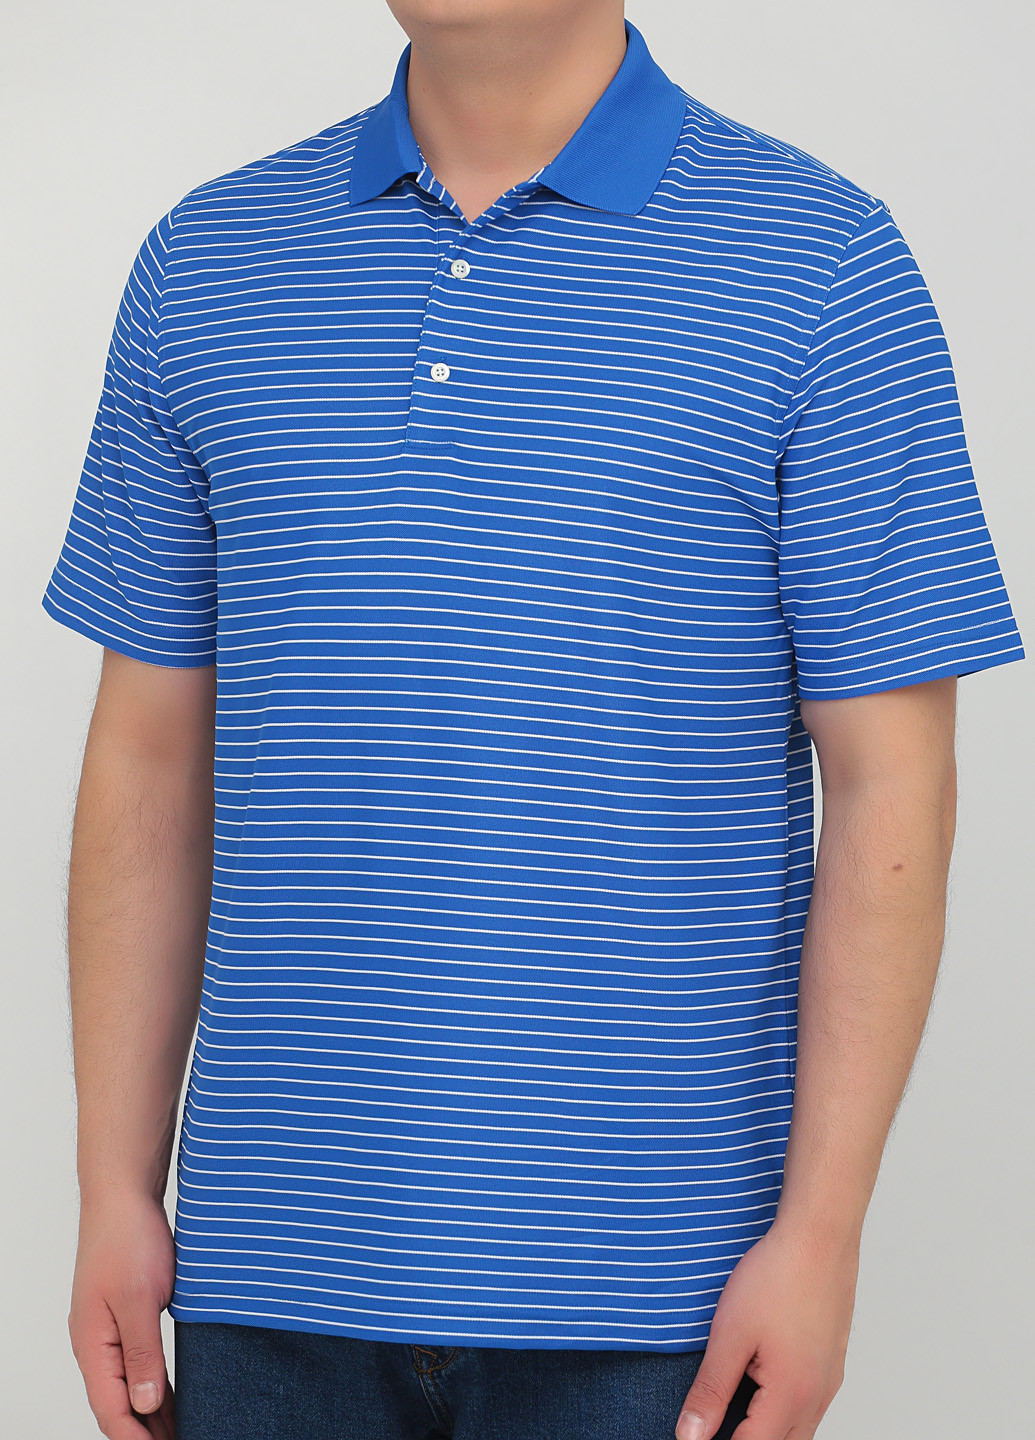 Синяя футболка-поло для мужчин Greg Norman в полоску